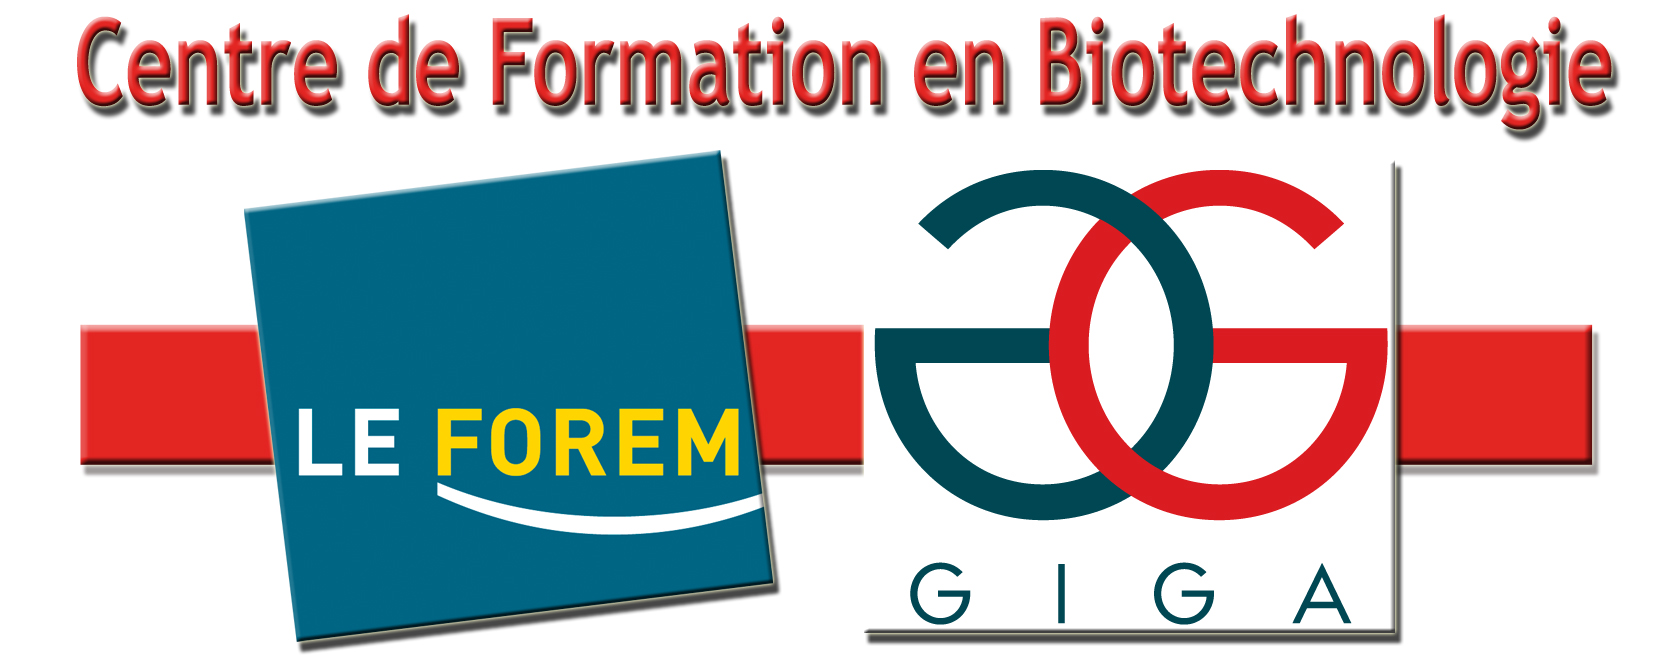 Forem-Biotech_logo (1)